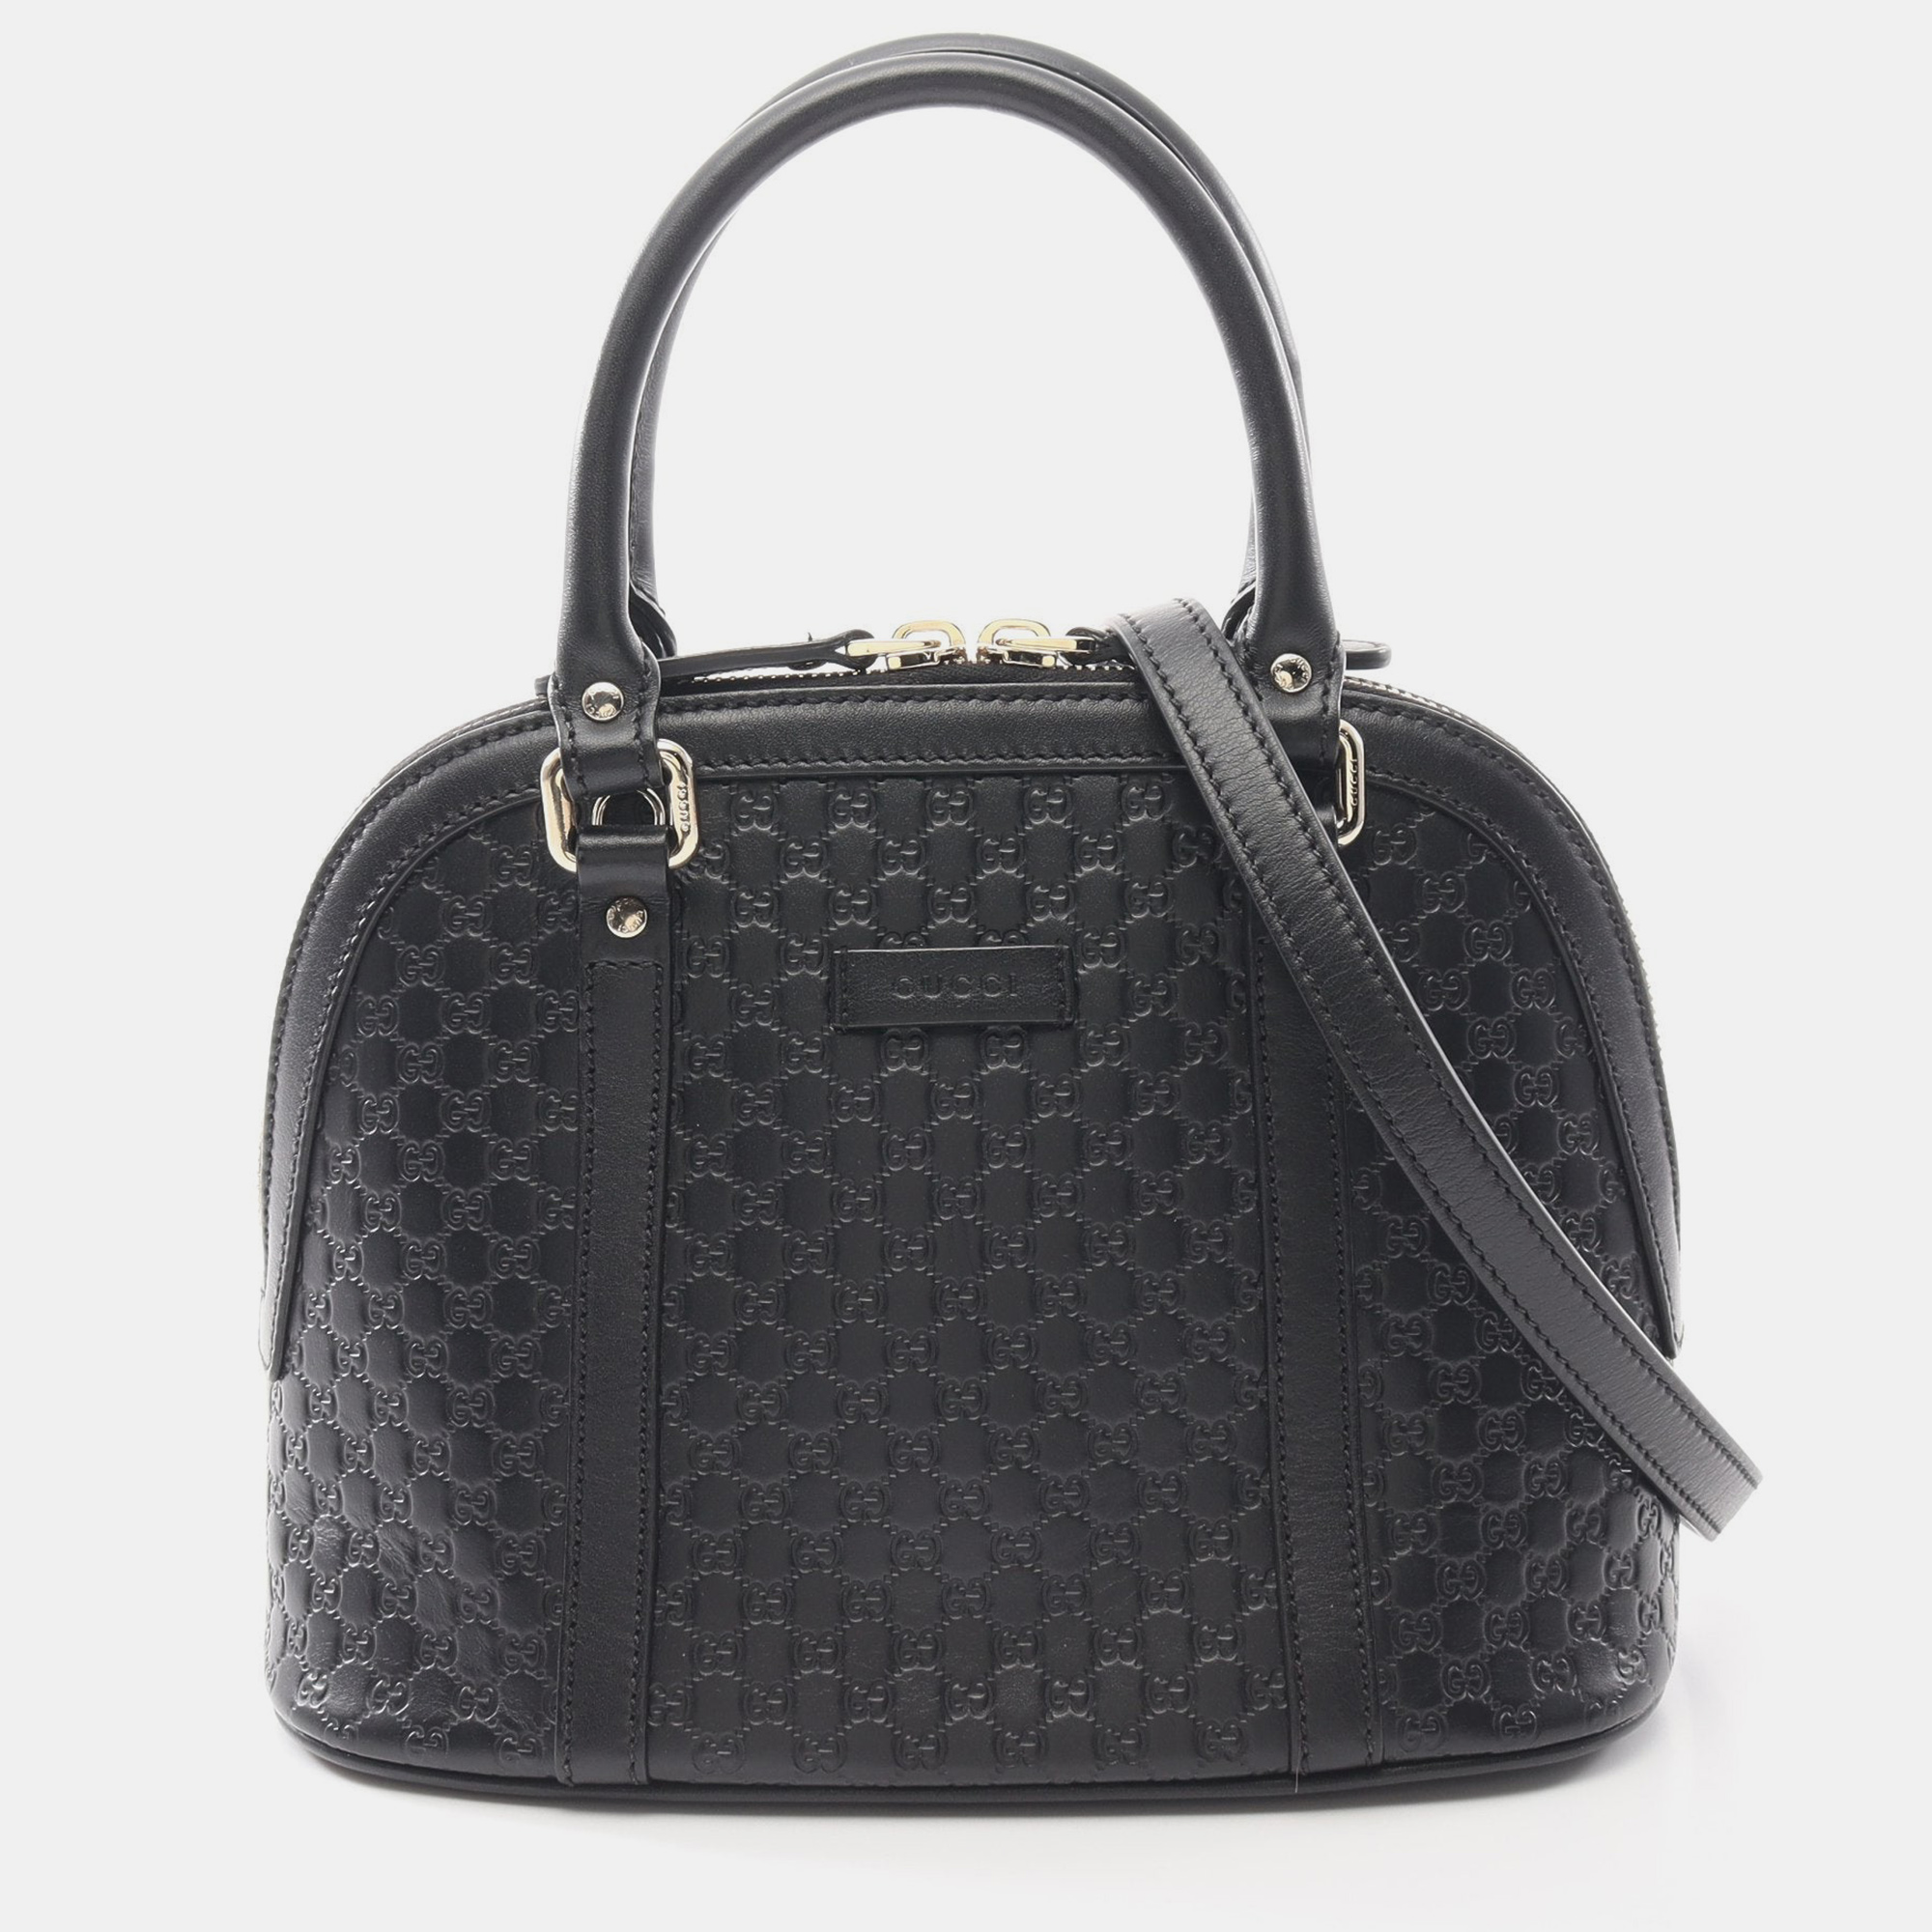 Gucci micro gucci sima handbag leather black 2way